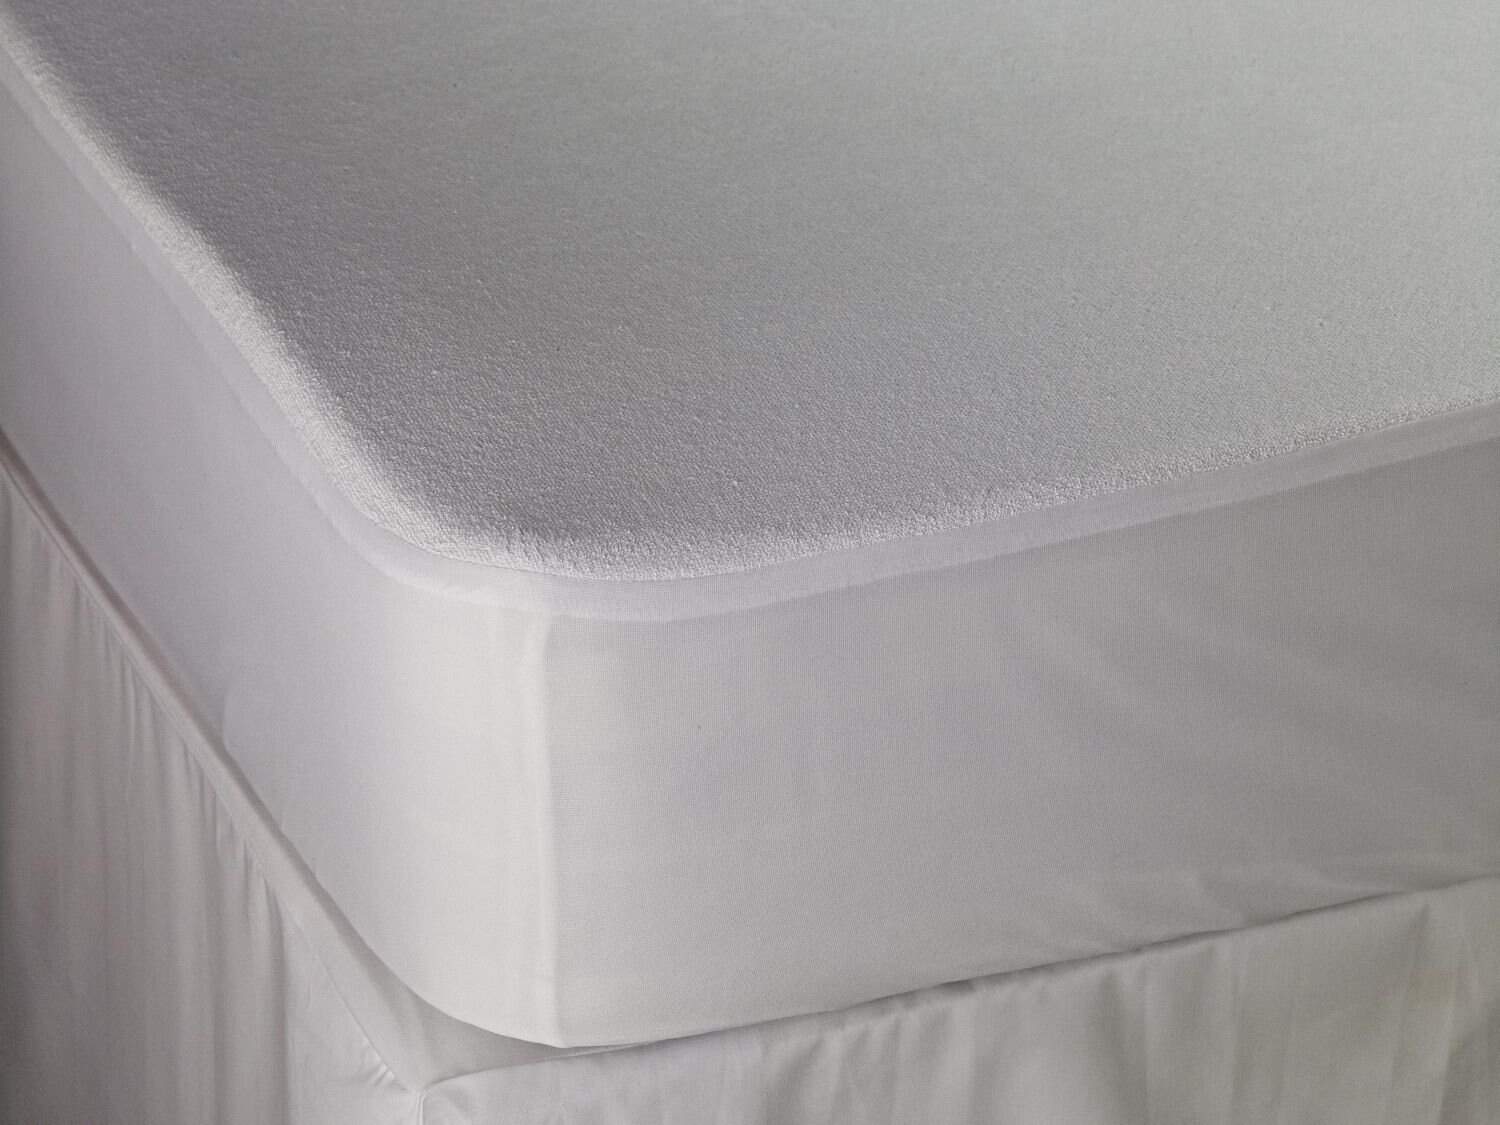 terry mattress protector waterproof pad